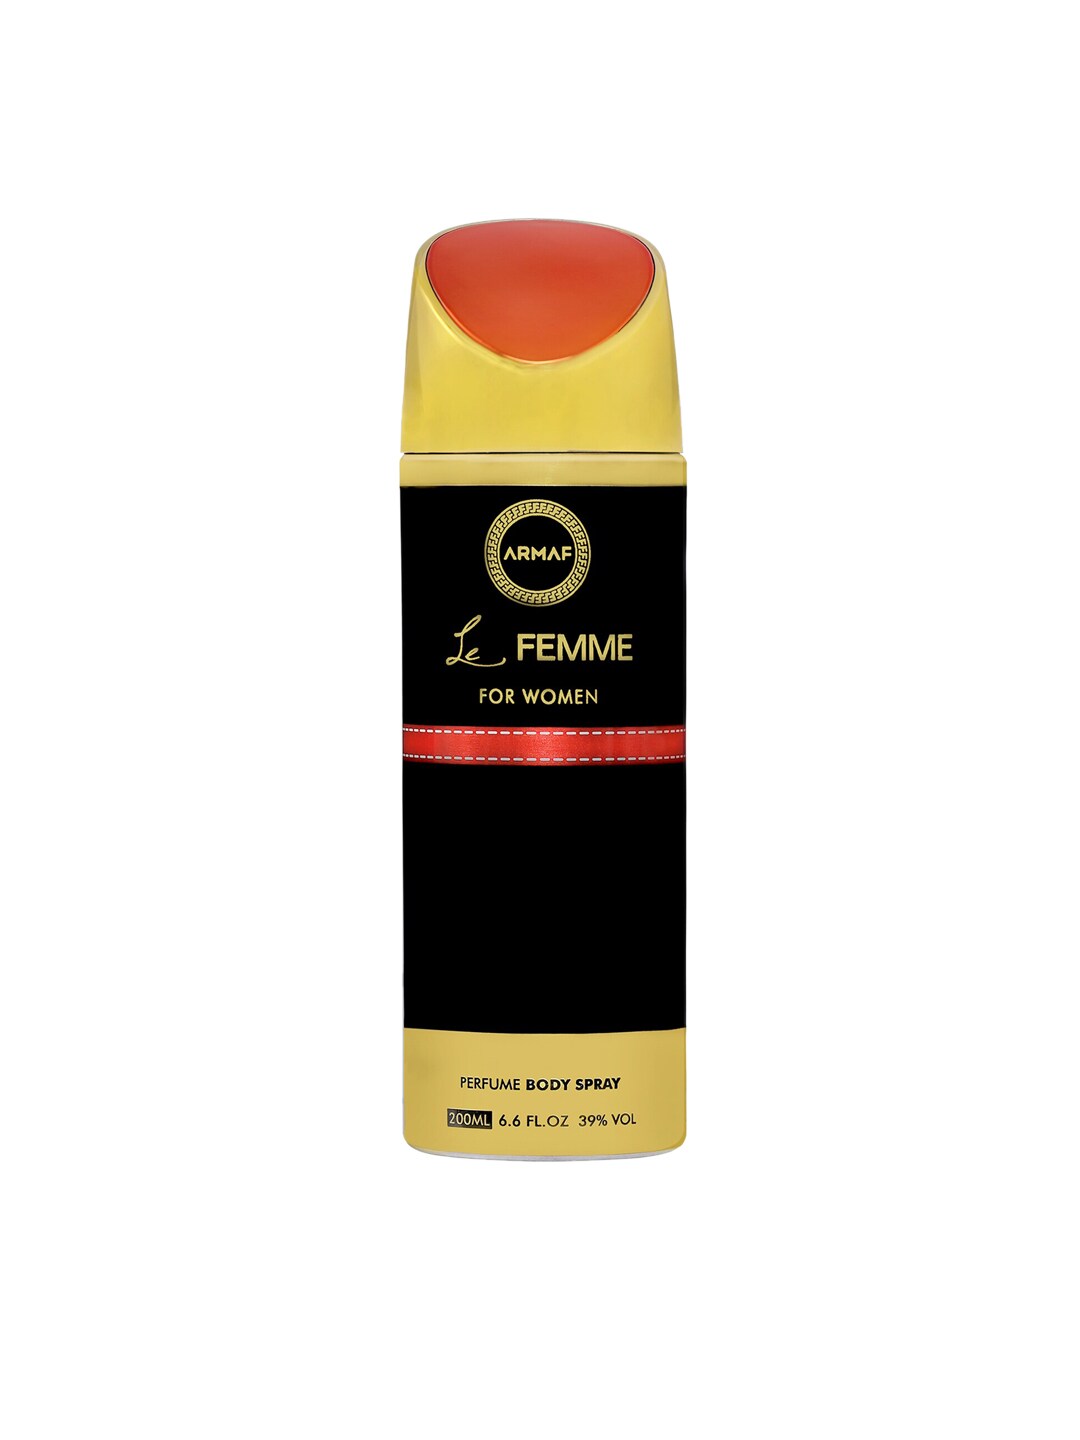 Armaf Women Le Femme Perfume Body Spray 200 ml Price in India